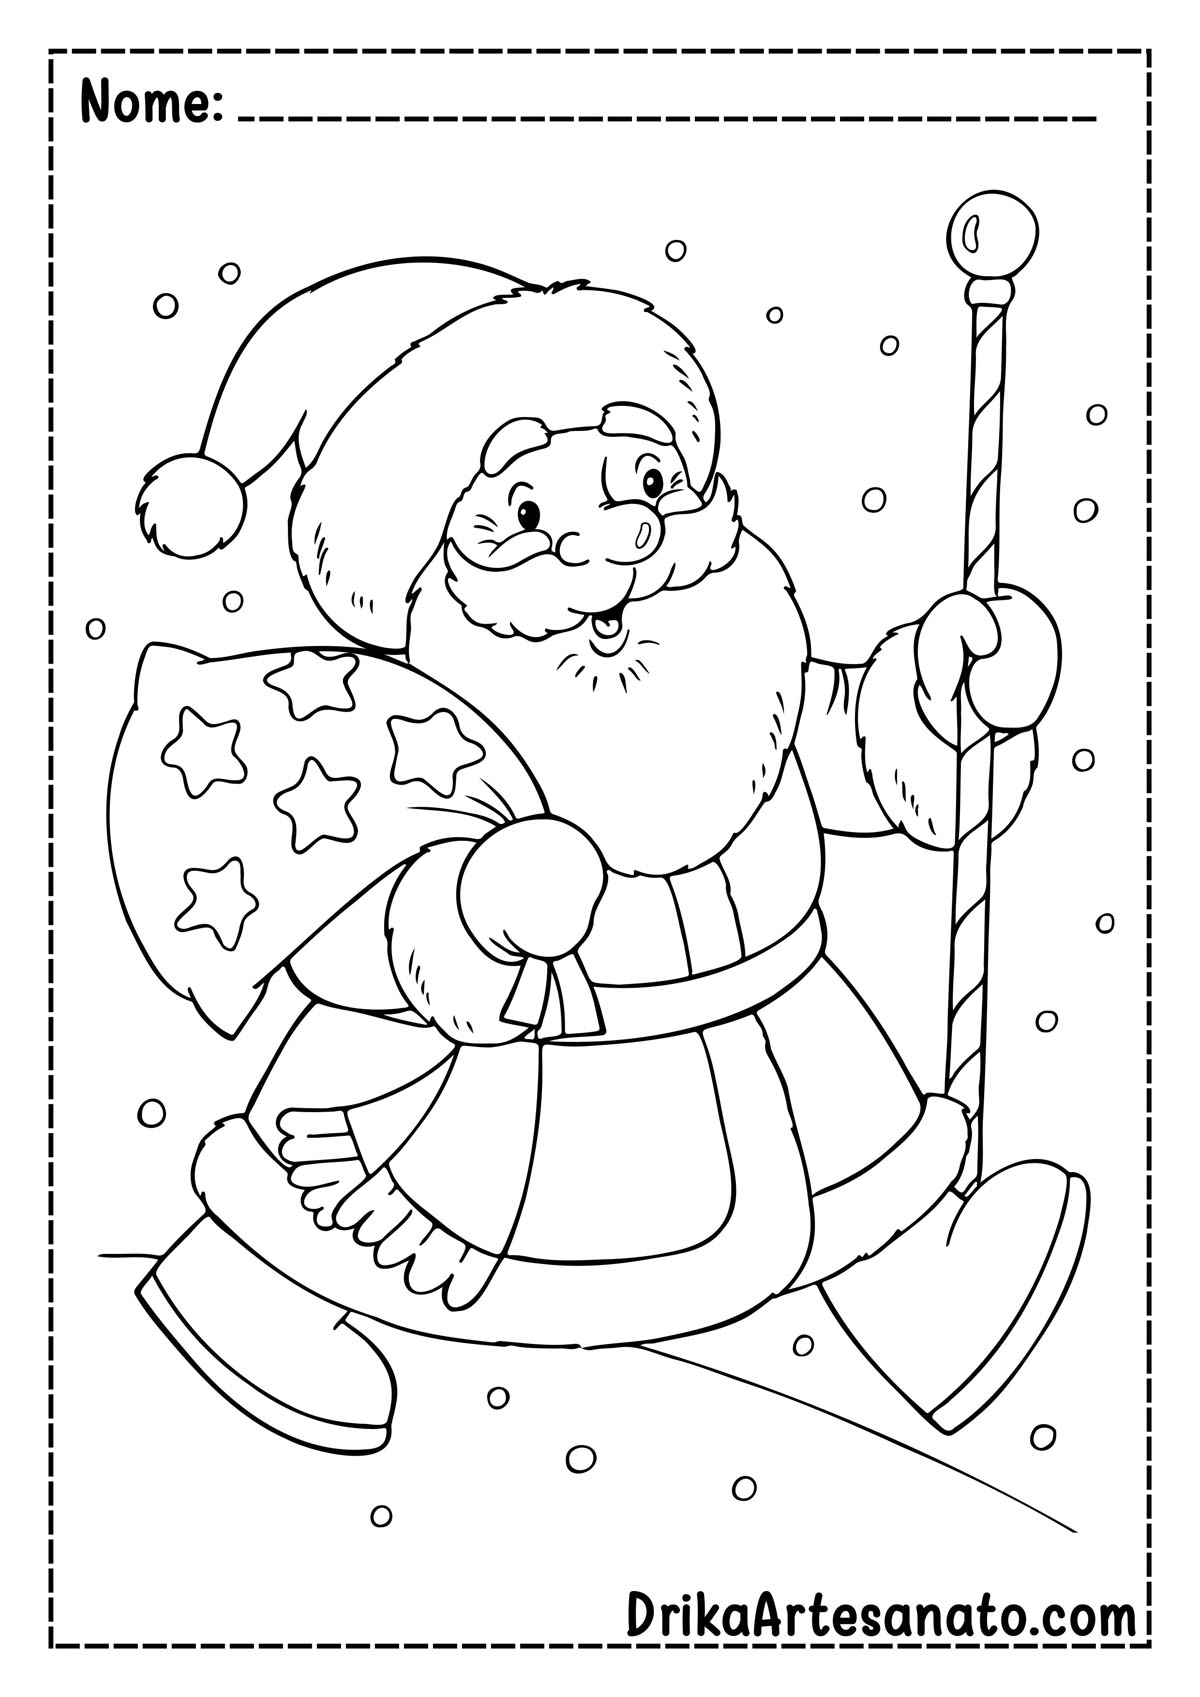 Desenho de Papai Noel para Imprimir e Colorir